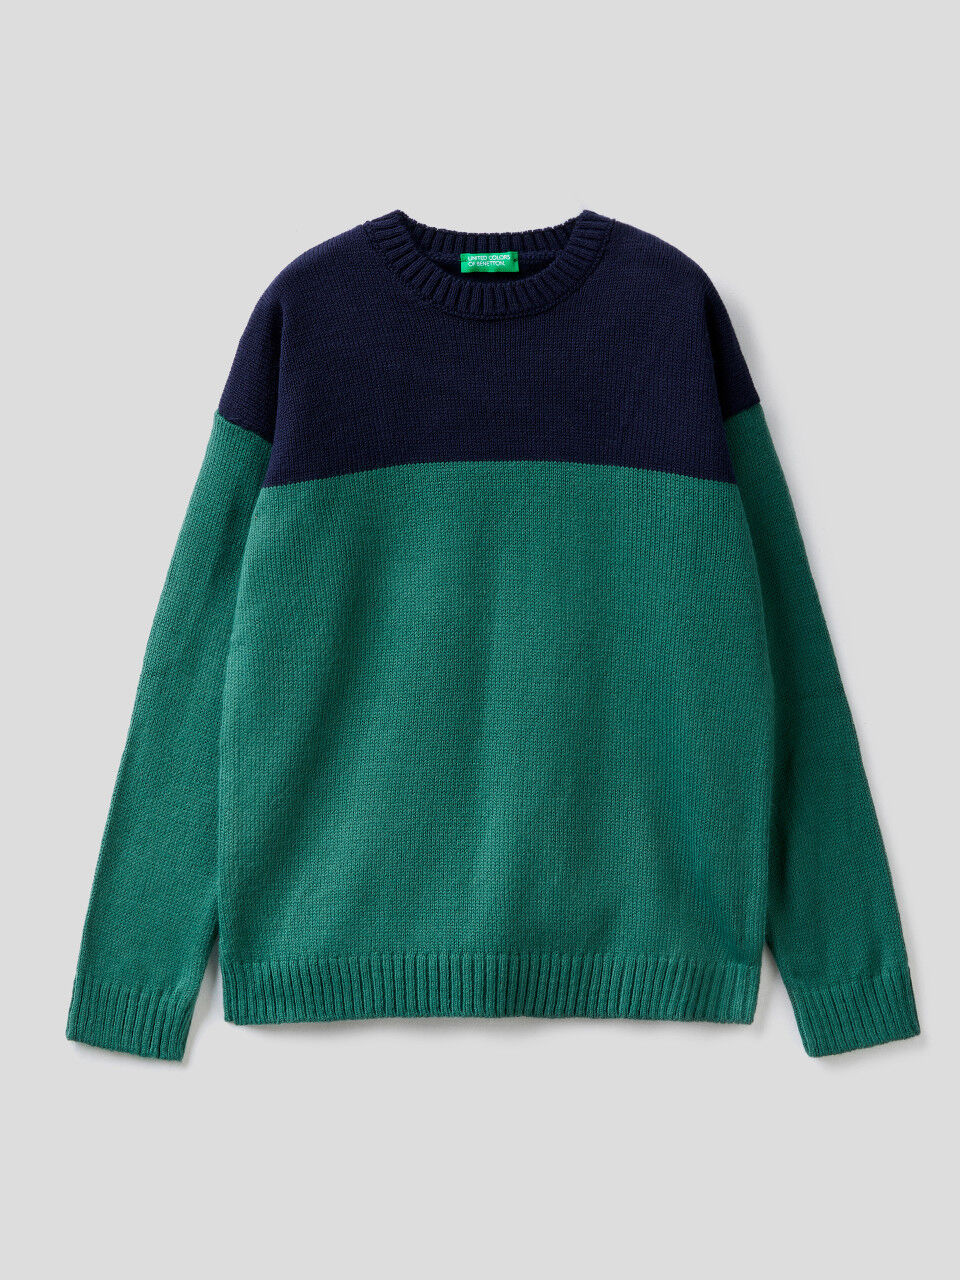 Mehrfarbig 18-24M KINDER Pullovers & Sweatshirts Stricken United colors of benetton Pullover Rabatt 99 % 